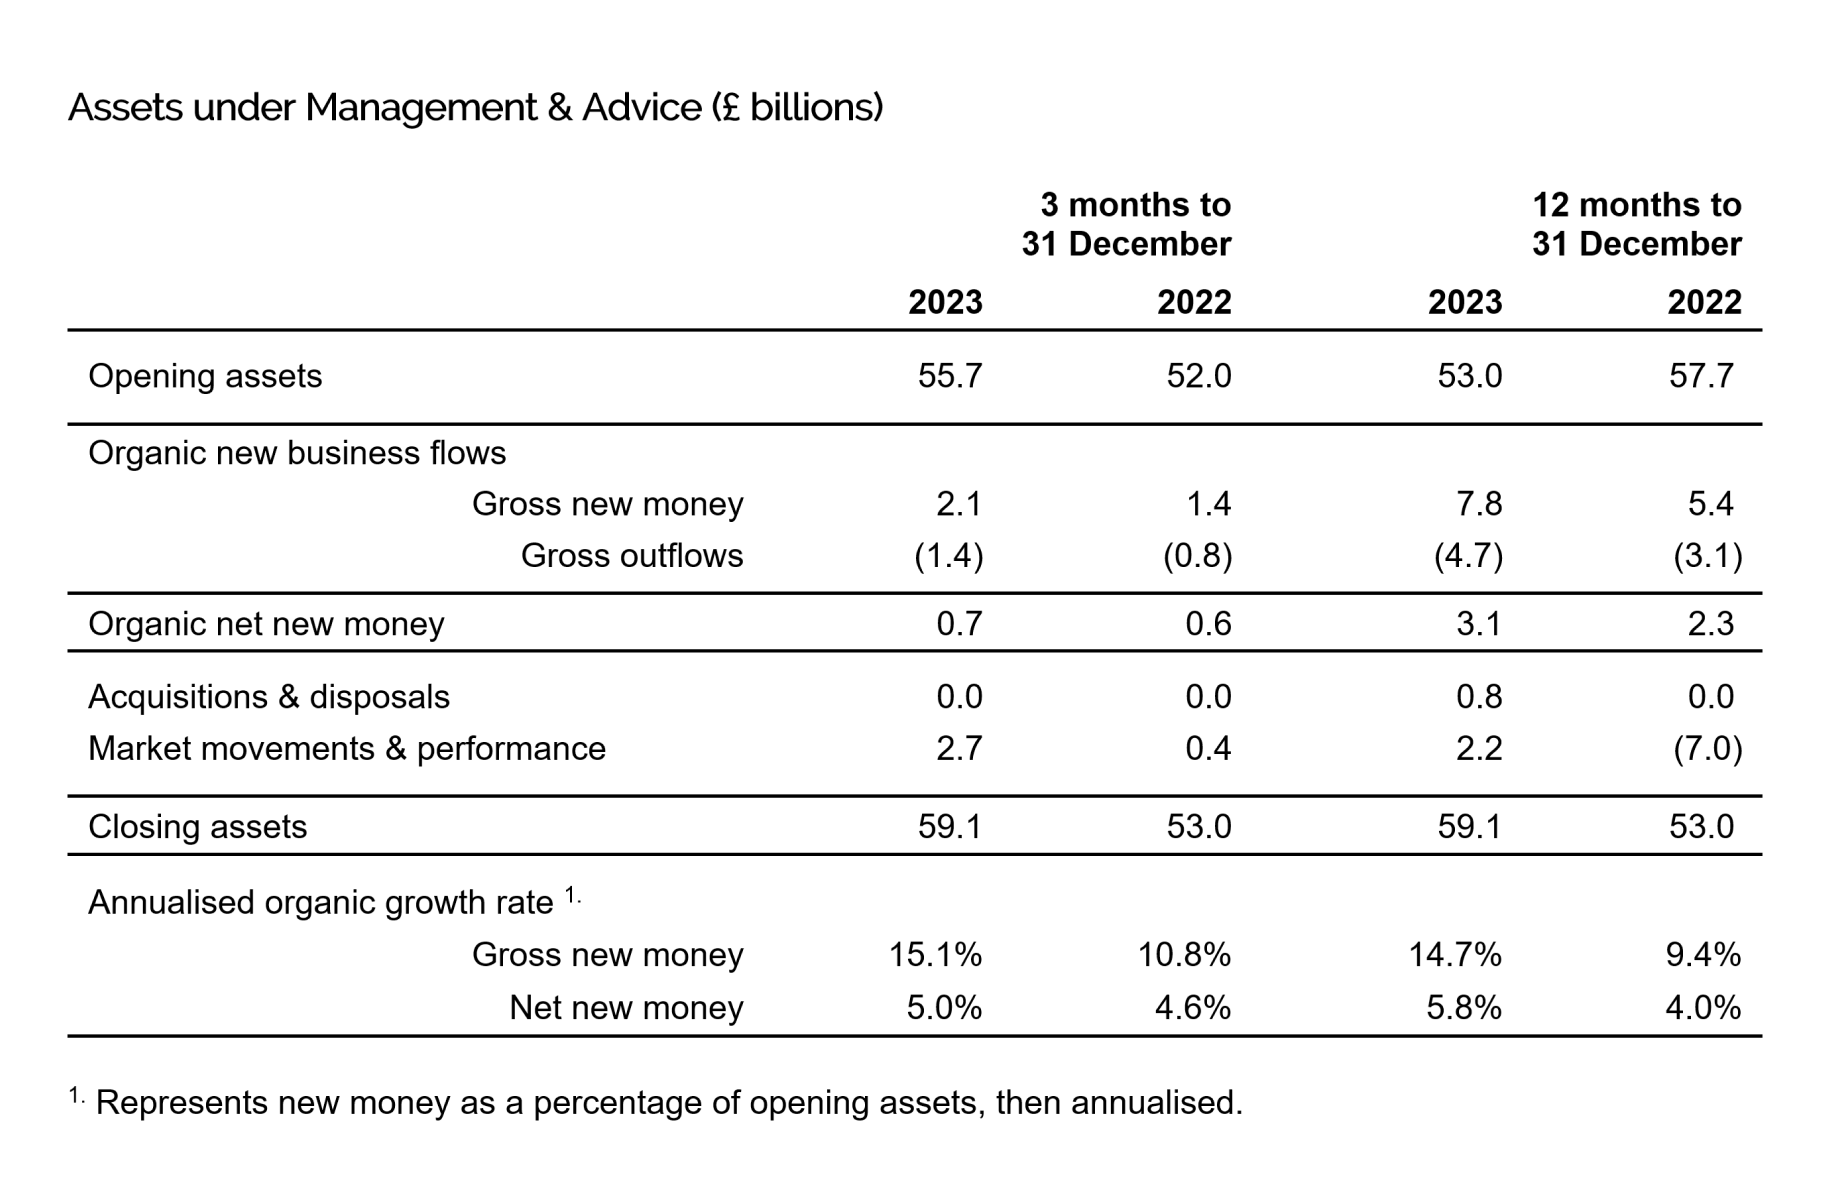 Assets under Management & Advice (£bn) as at 31 December 2023